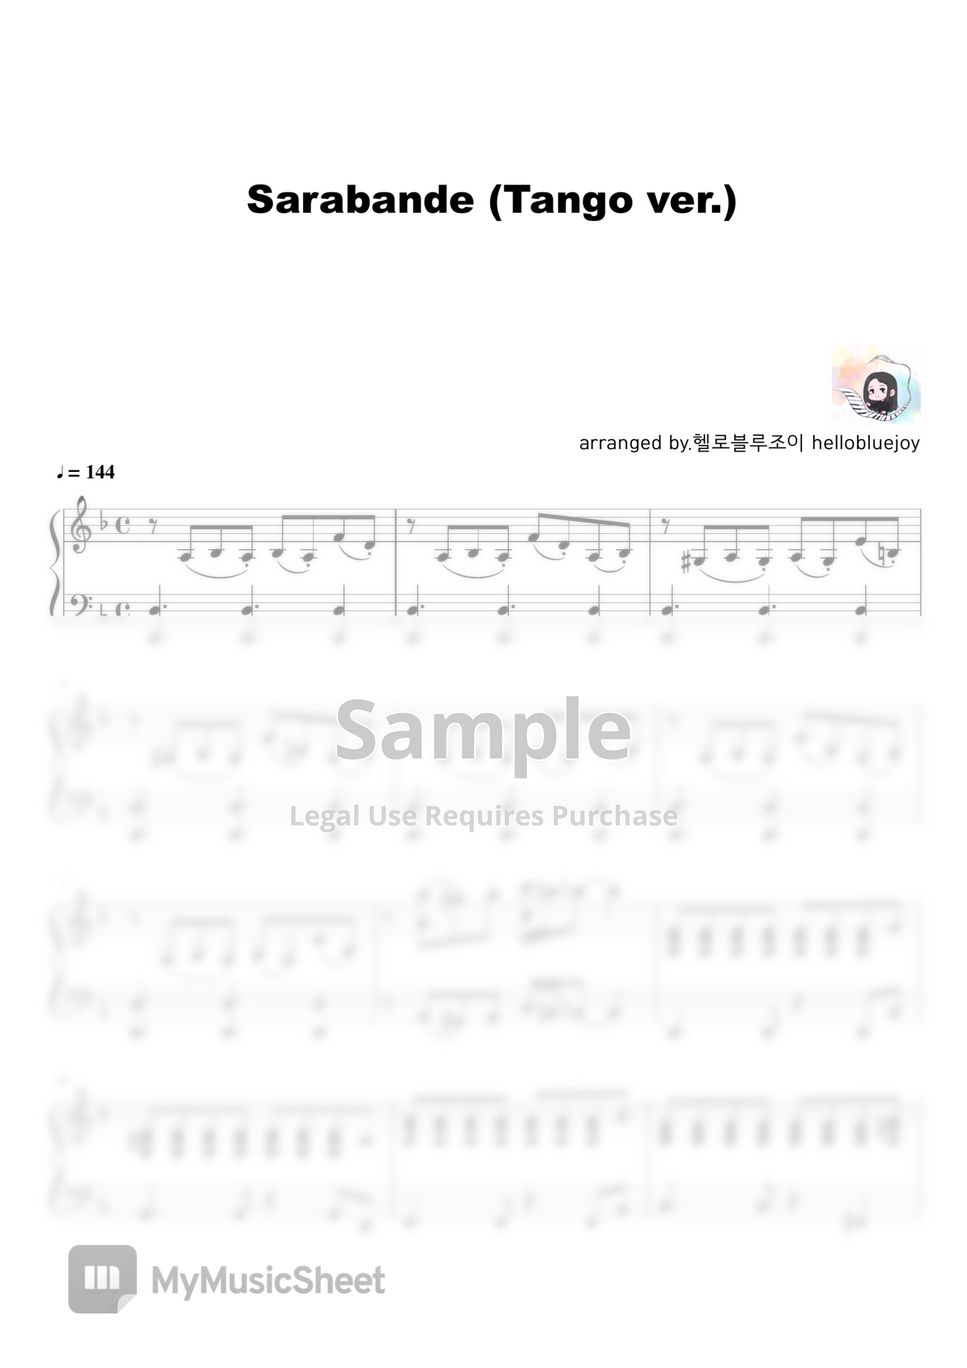 G.F.Handel - Sarabande (Tango ver.) by 헬로블루조이 hellobluejoy